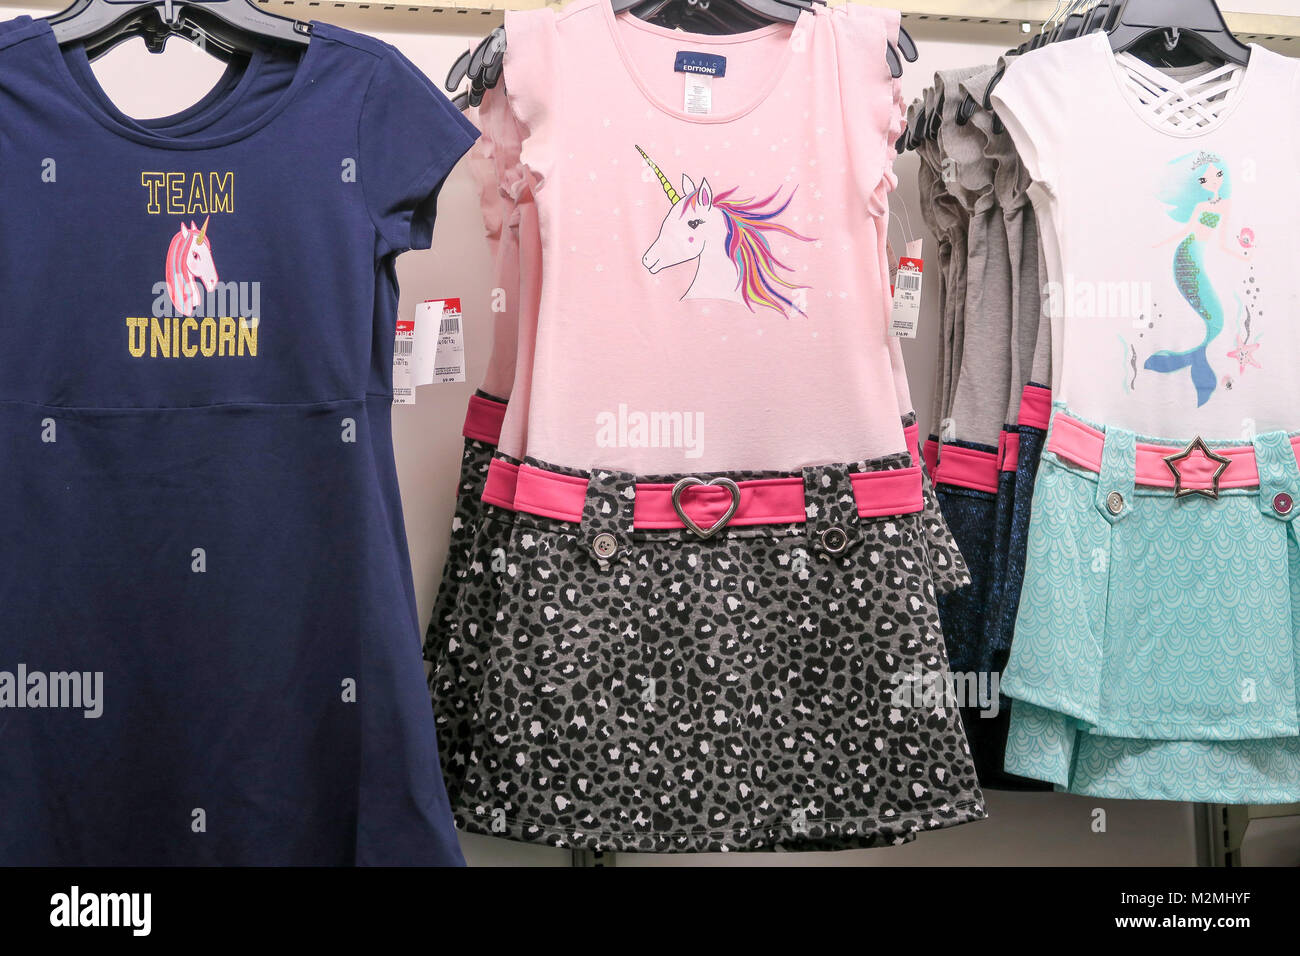 Girls NYC, at - Kmart, Alamy Stock Photo Dresses USA